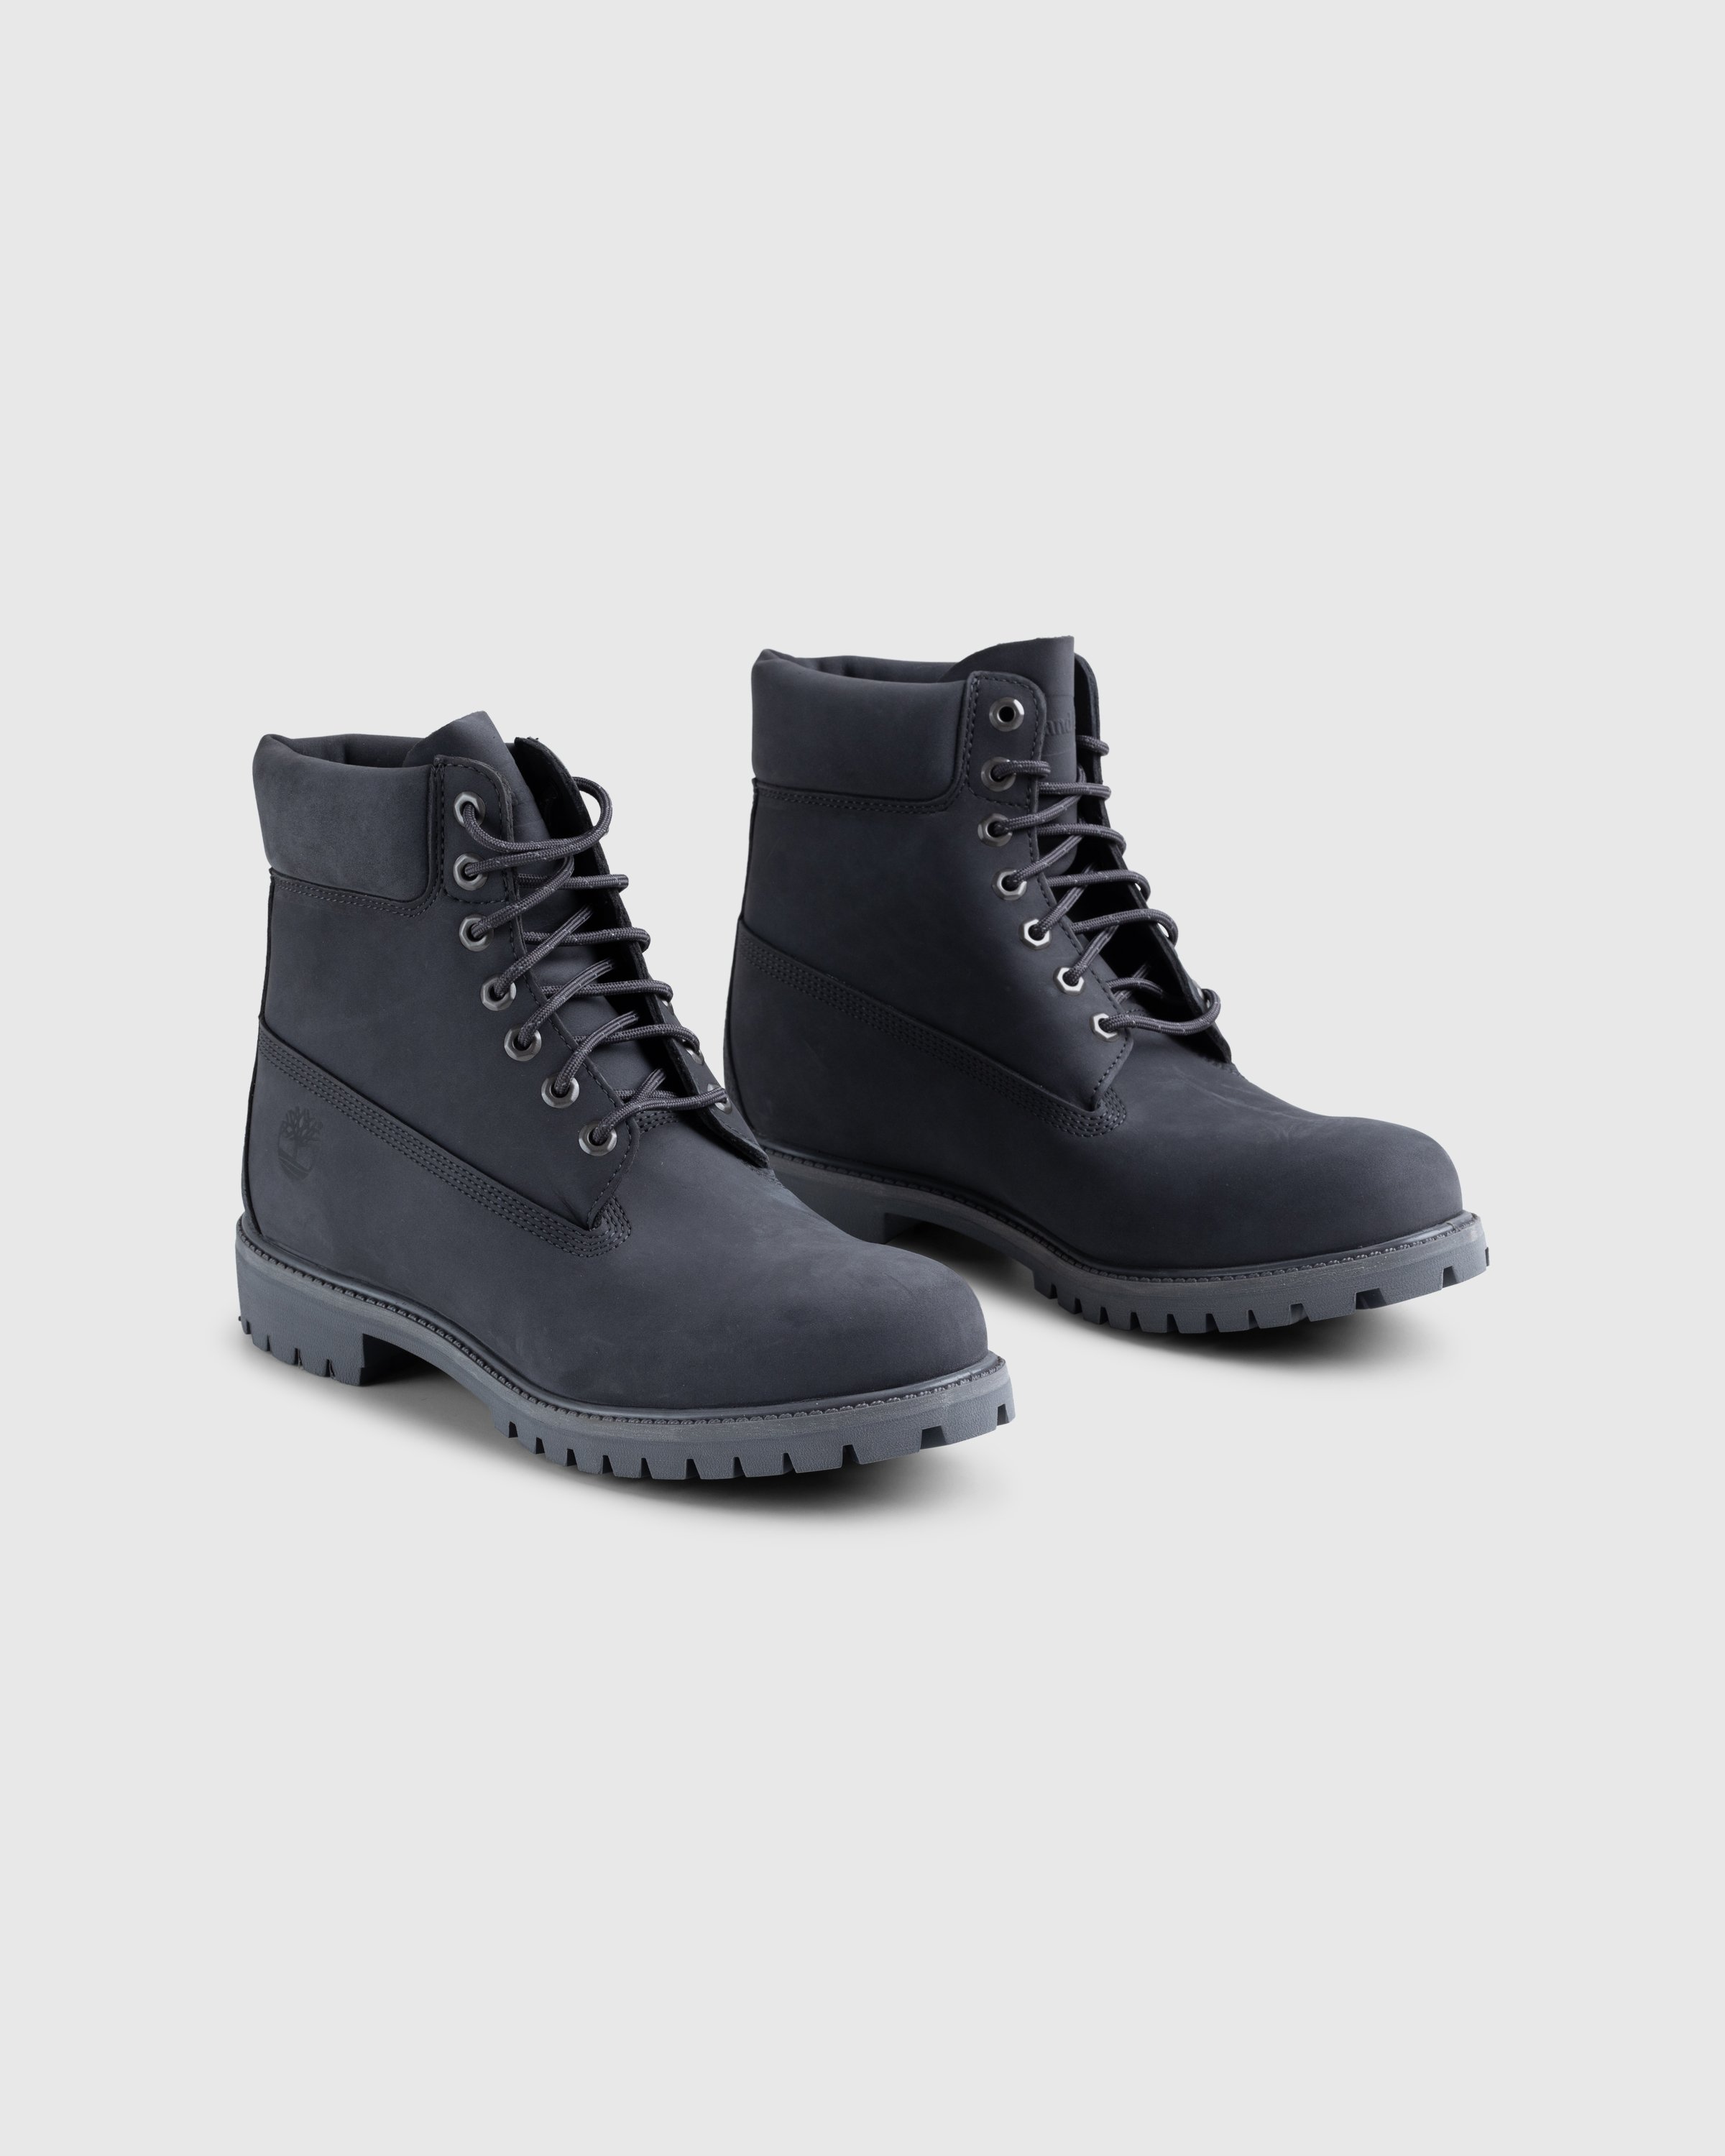 Timberland - 6 Inch Premium Boot Blackened Pearl - Footwear - Grey - Image 3